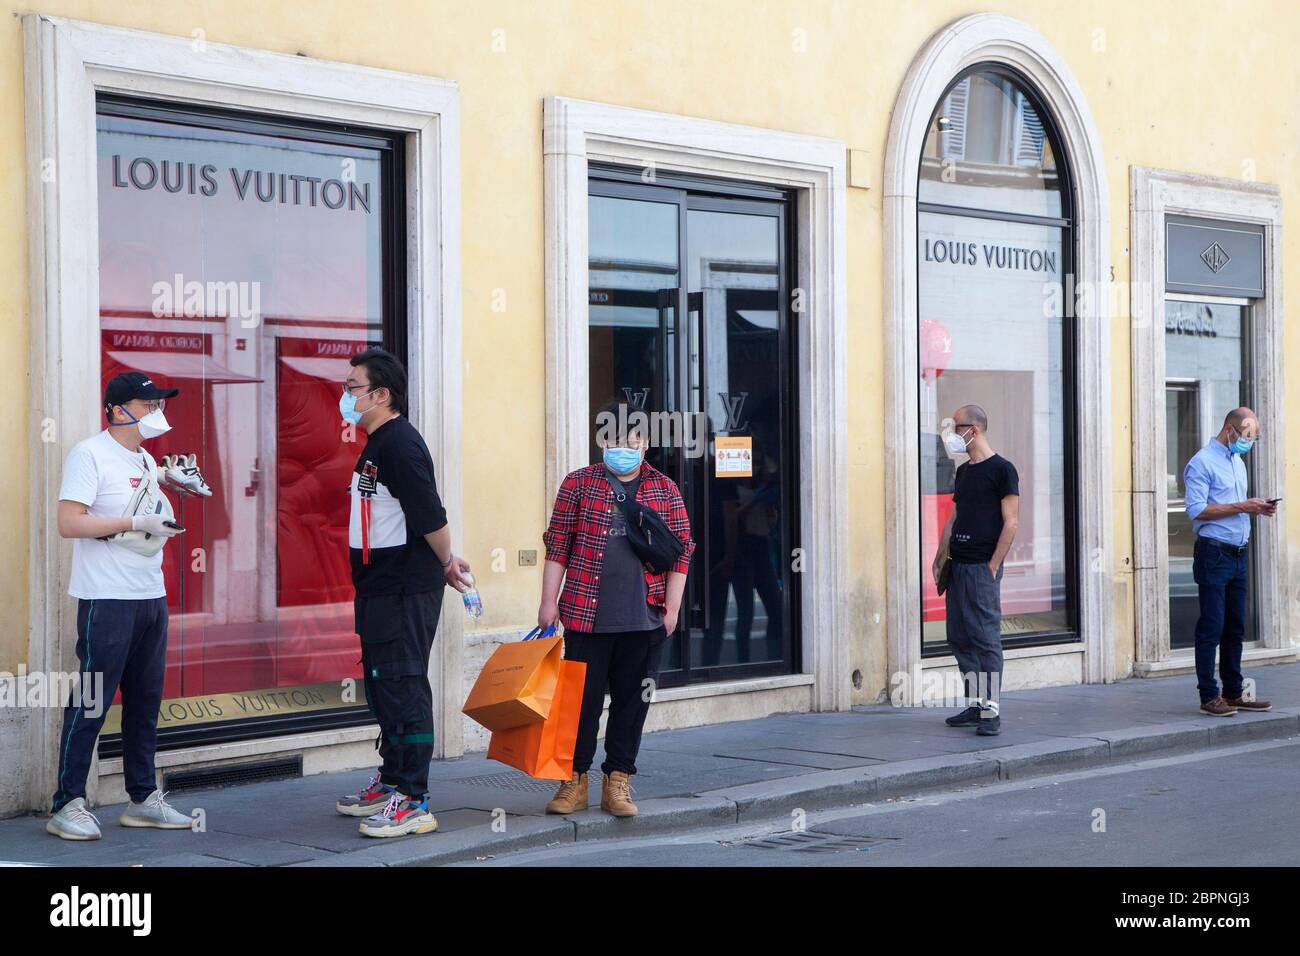 Dublin Live - Upside down logo on Louis Vuitton bags is